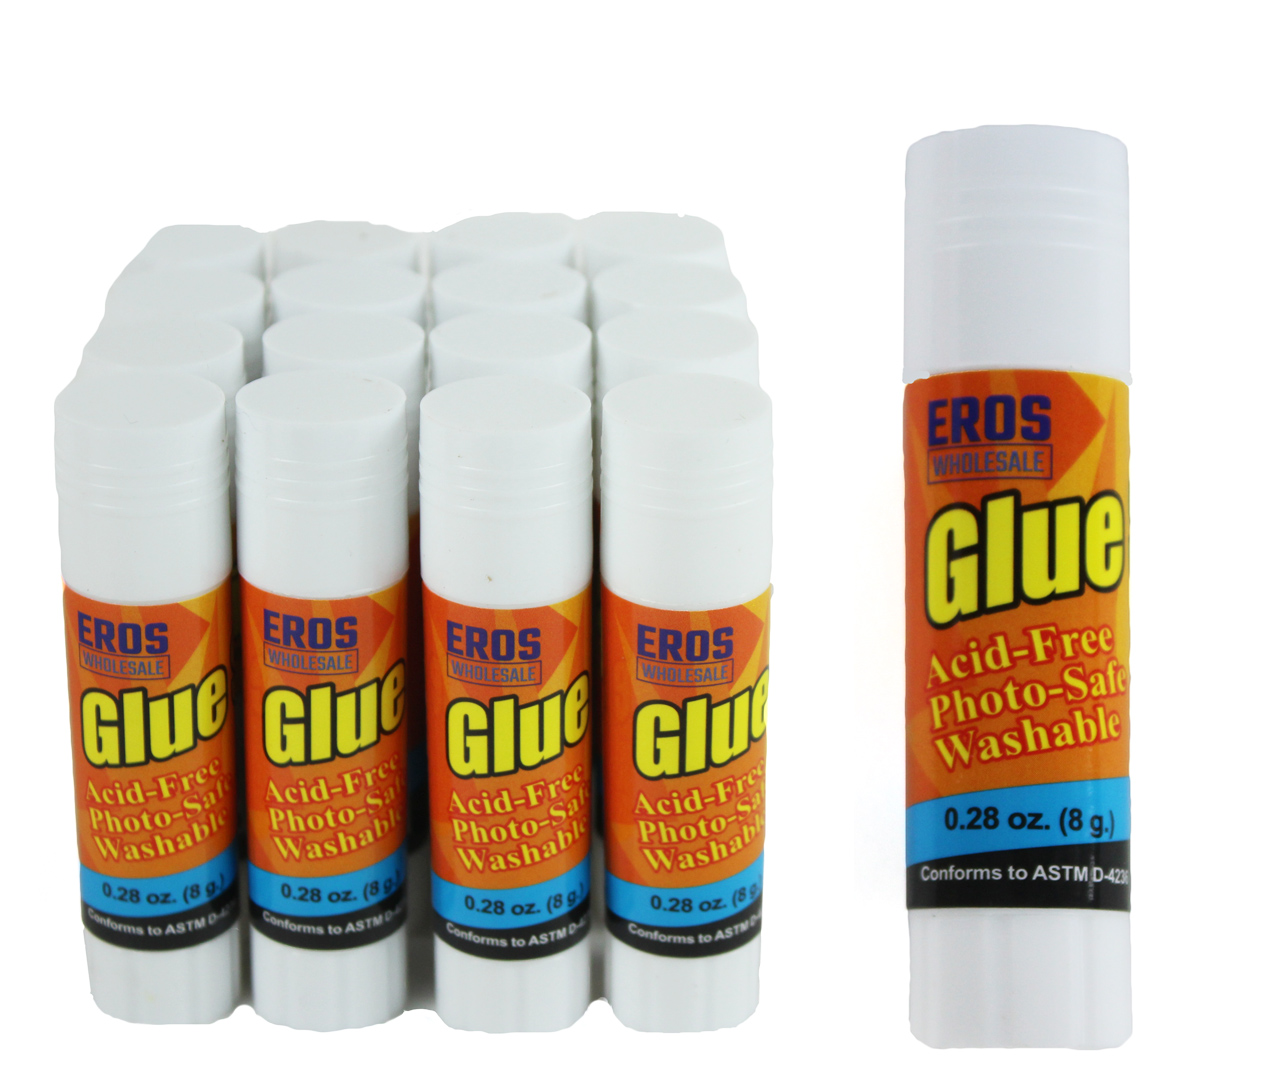 All Purpose 8g School Glue Sticks